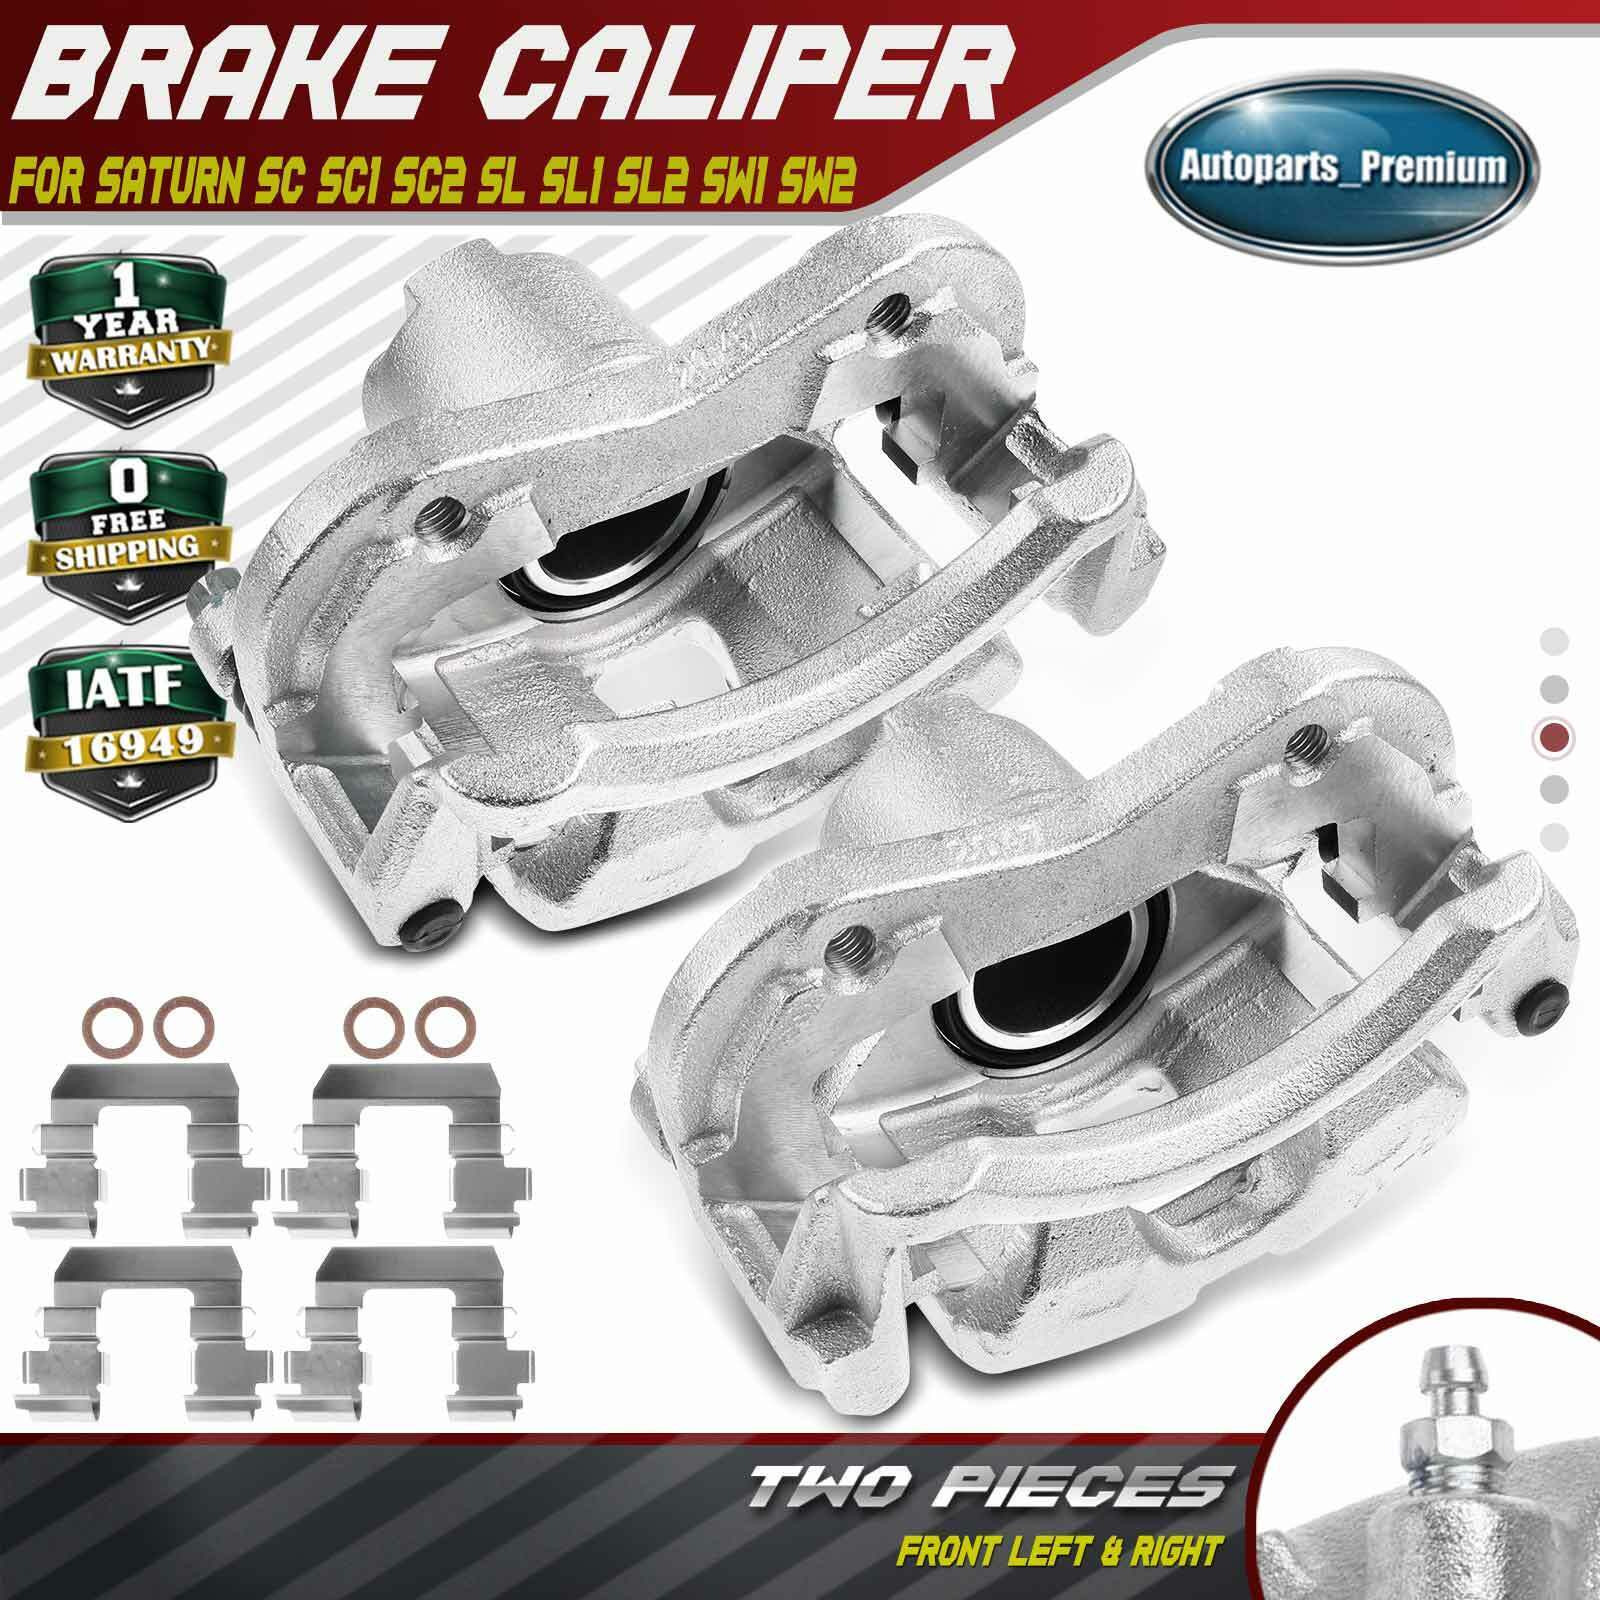 2x Brake Caliper w/ Bracket for Saturn SC SC1 SC2 SL SL1 SL2 SW1 SW2 Front Sides